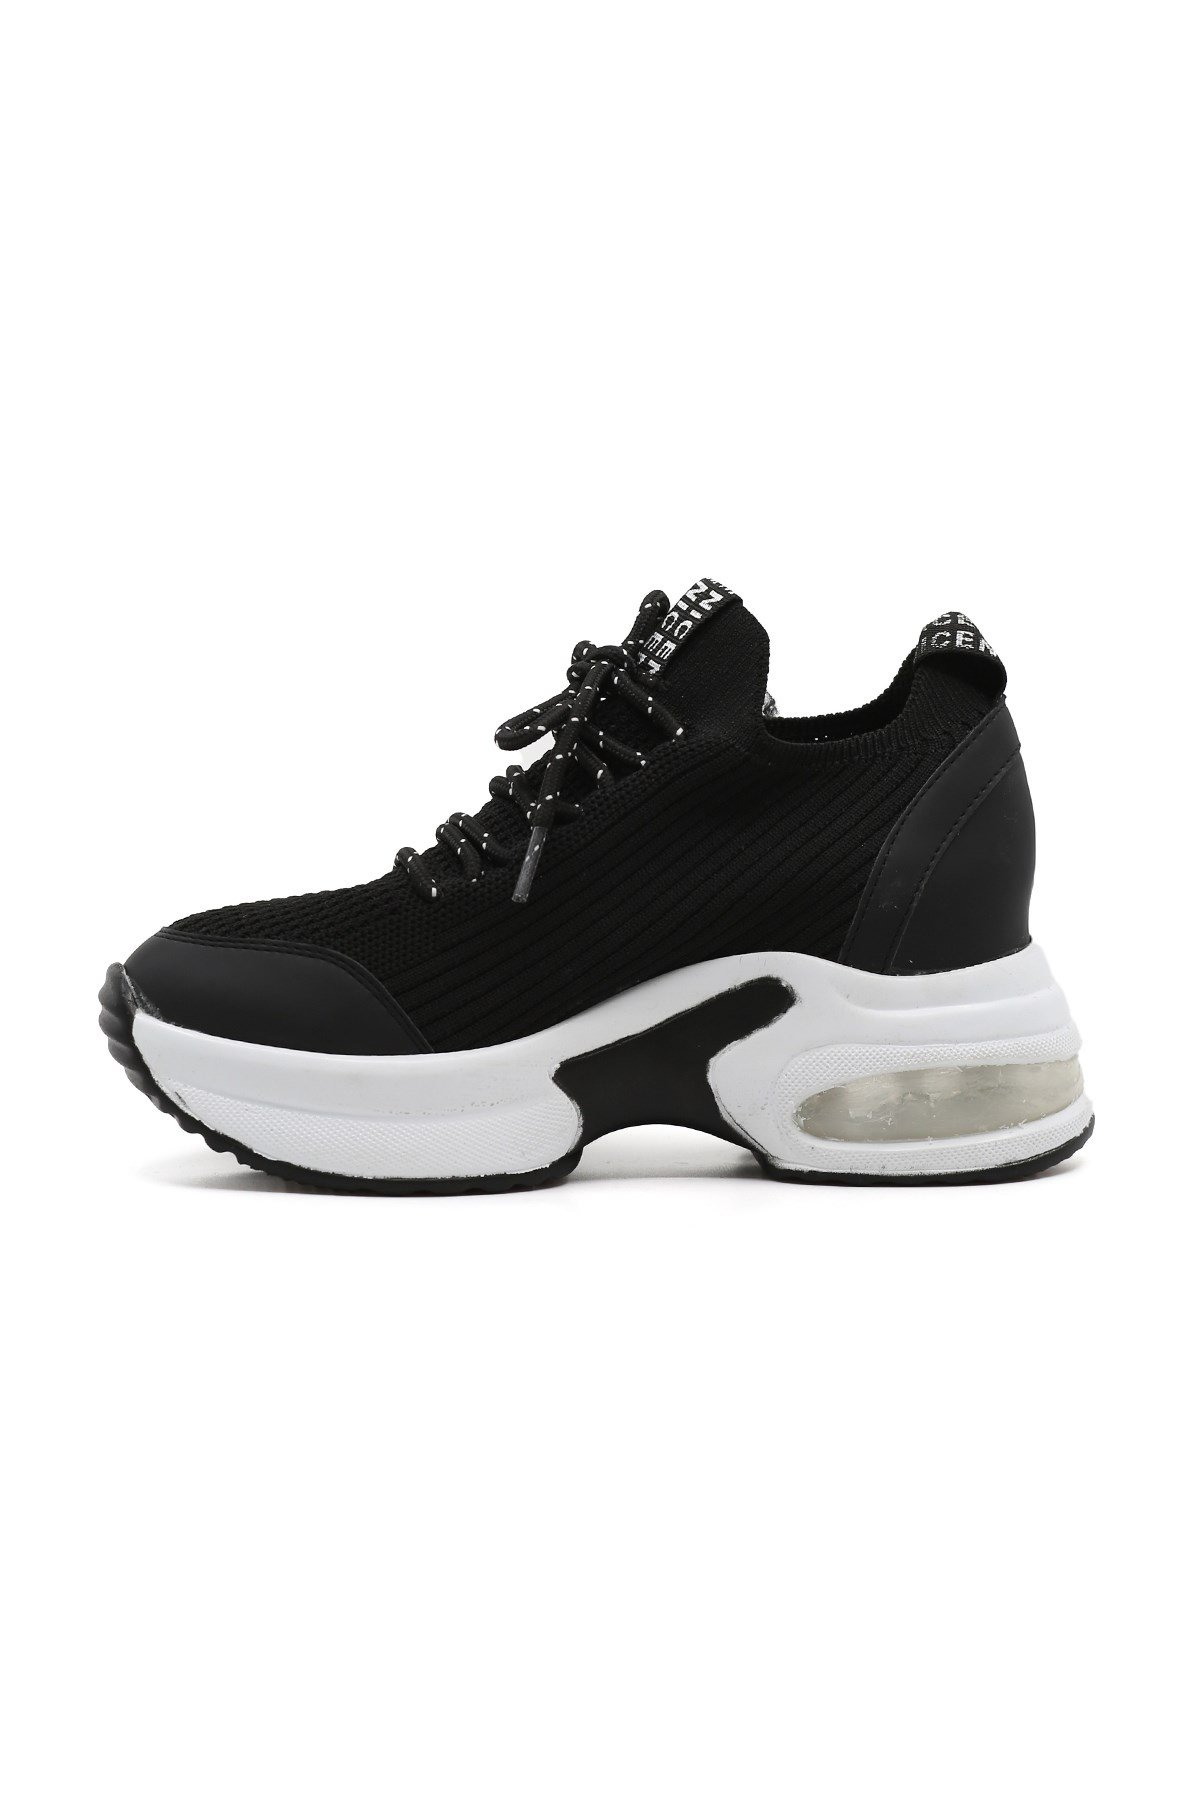 Afrodi̇t Model 10 Cm Gi̇zli̇ Topuk Tri̇ko Detayli Spor Sneakers Spor Ayakkabi Siy.bey